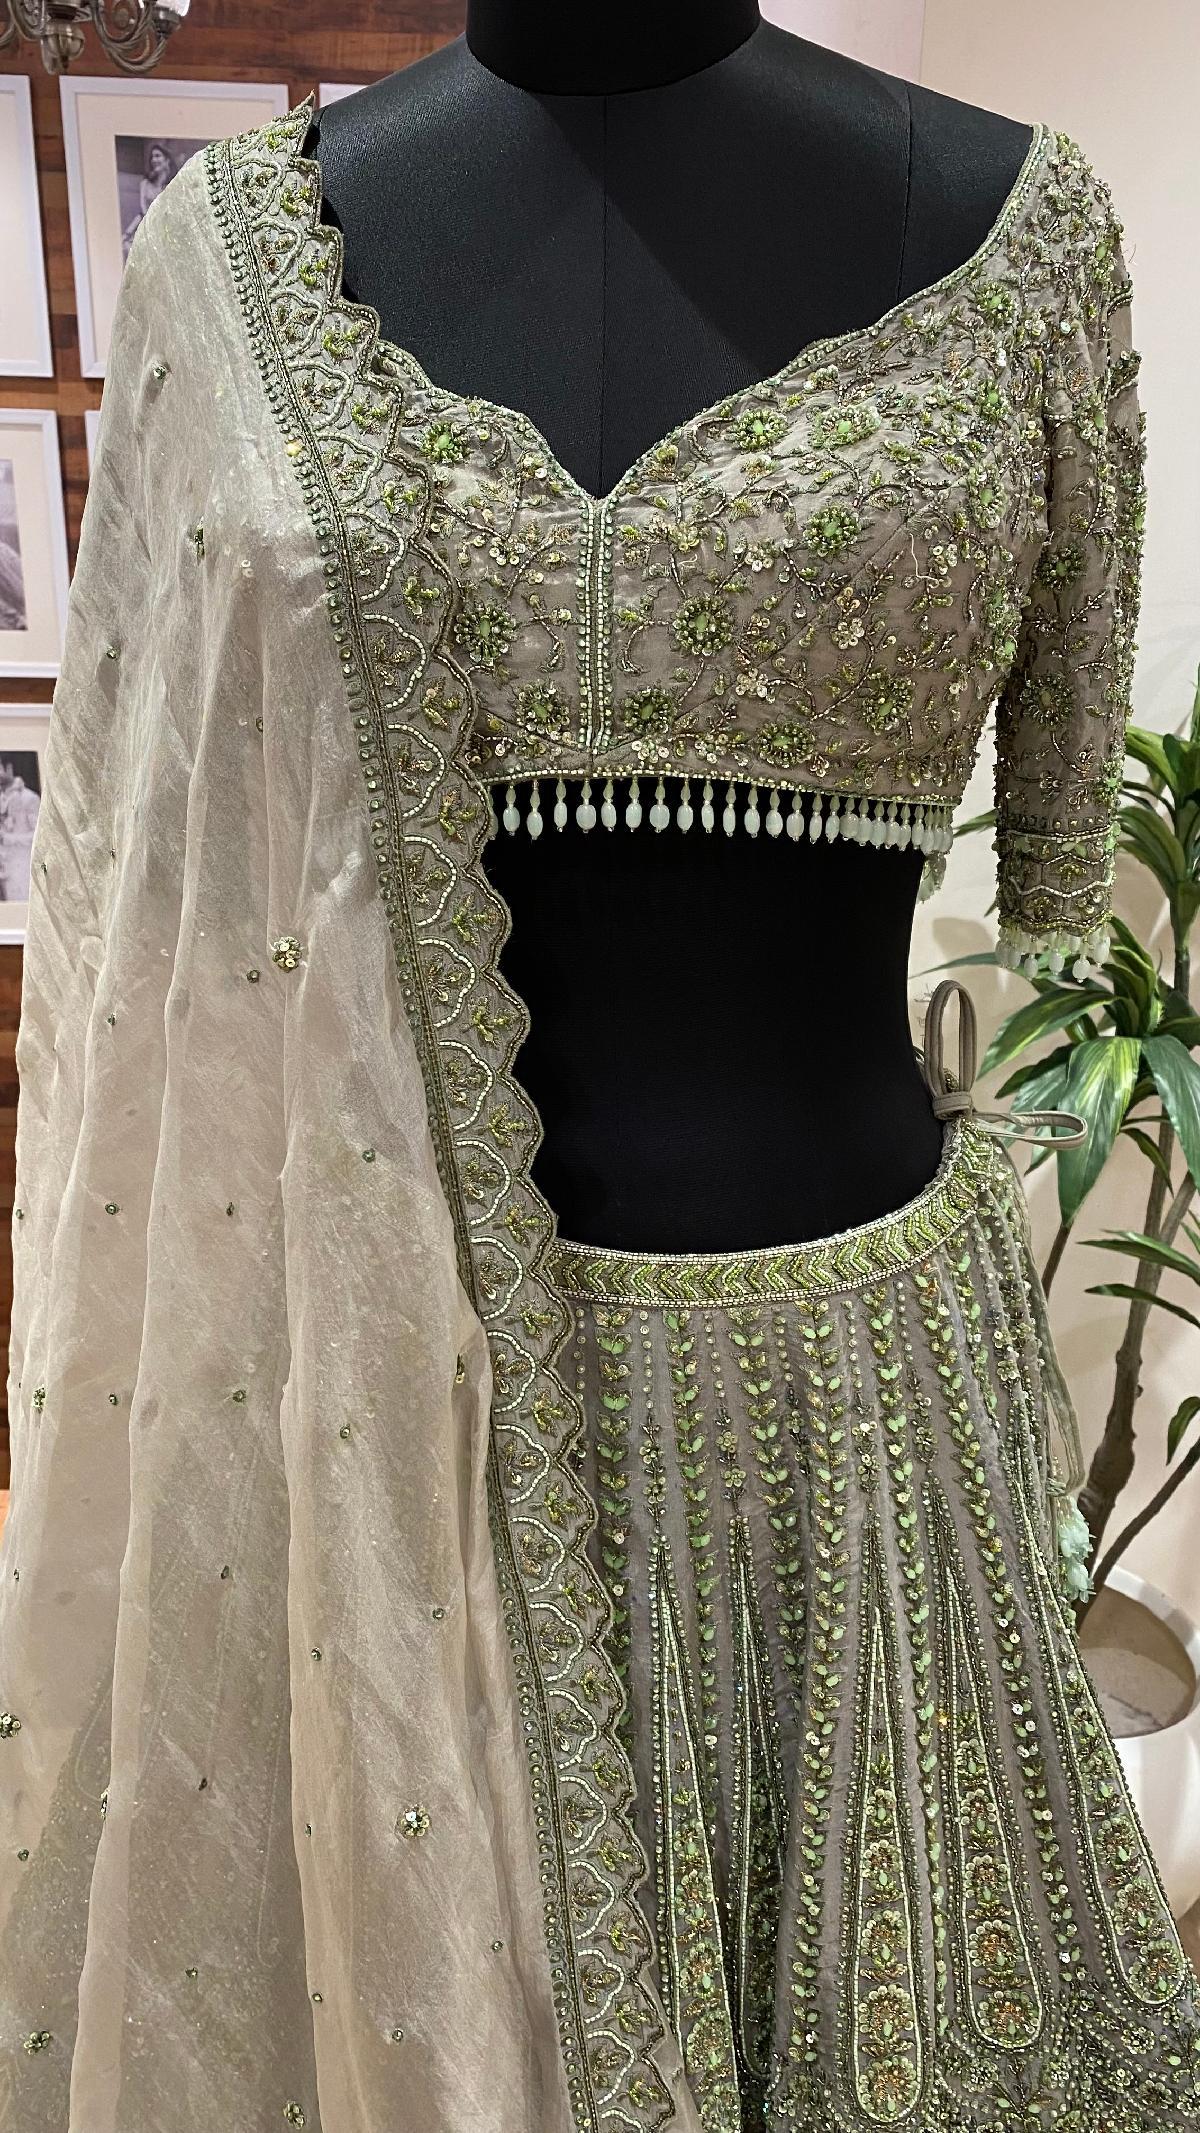 Payal Keyal Design - Bridal Wear Delhi NCR | Prices & Reviews